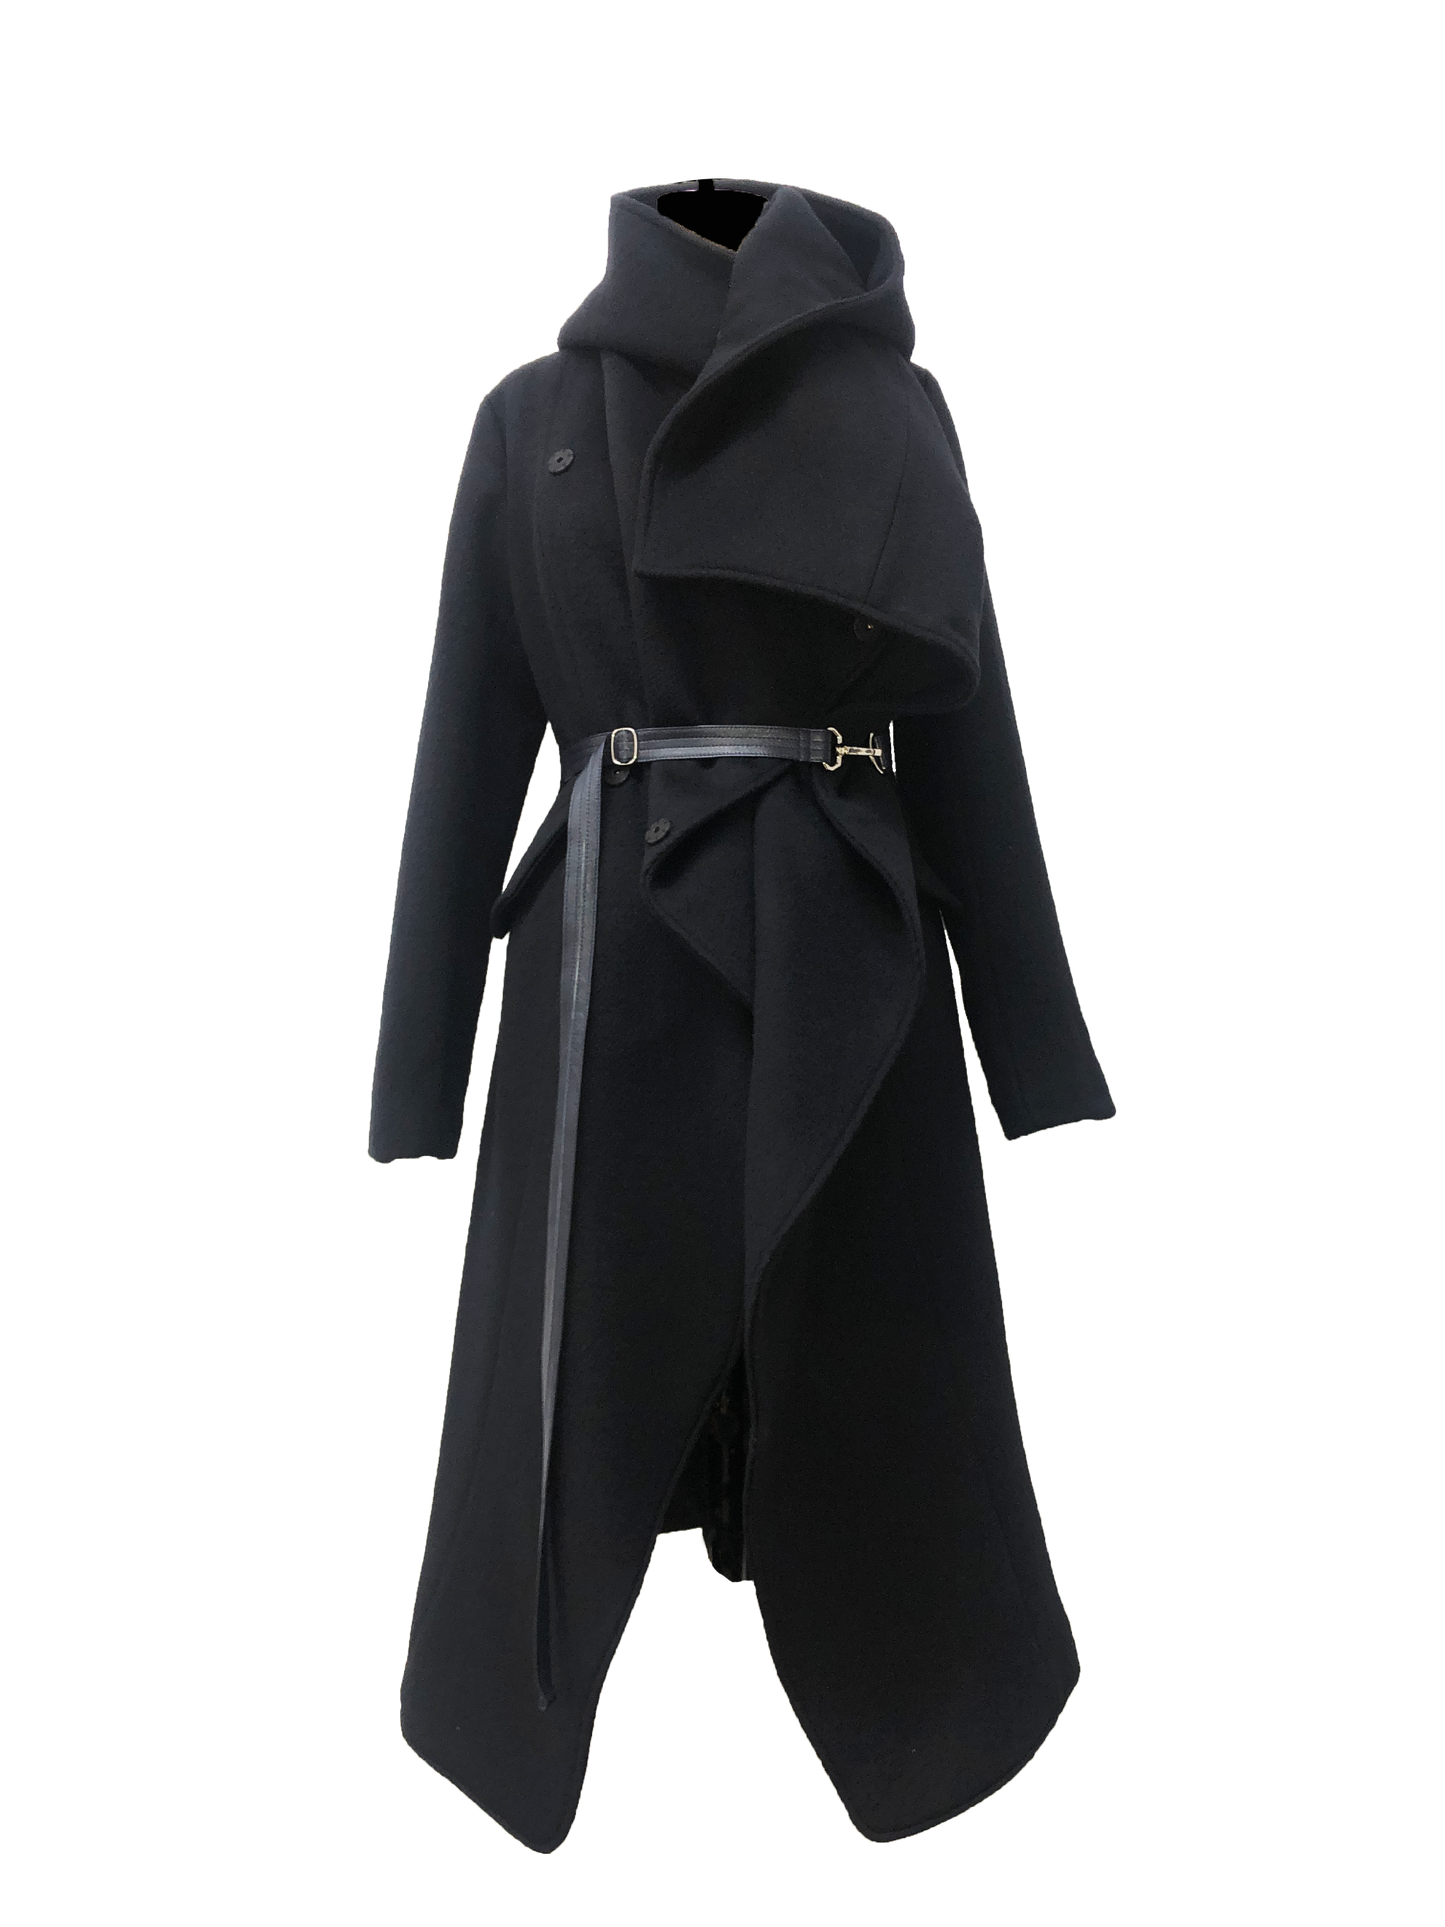 Medium length Black Coat with a hood and adjustable lambskin leather belt alongside metal clip closures